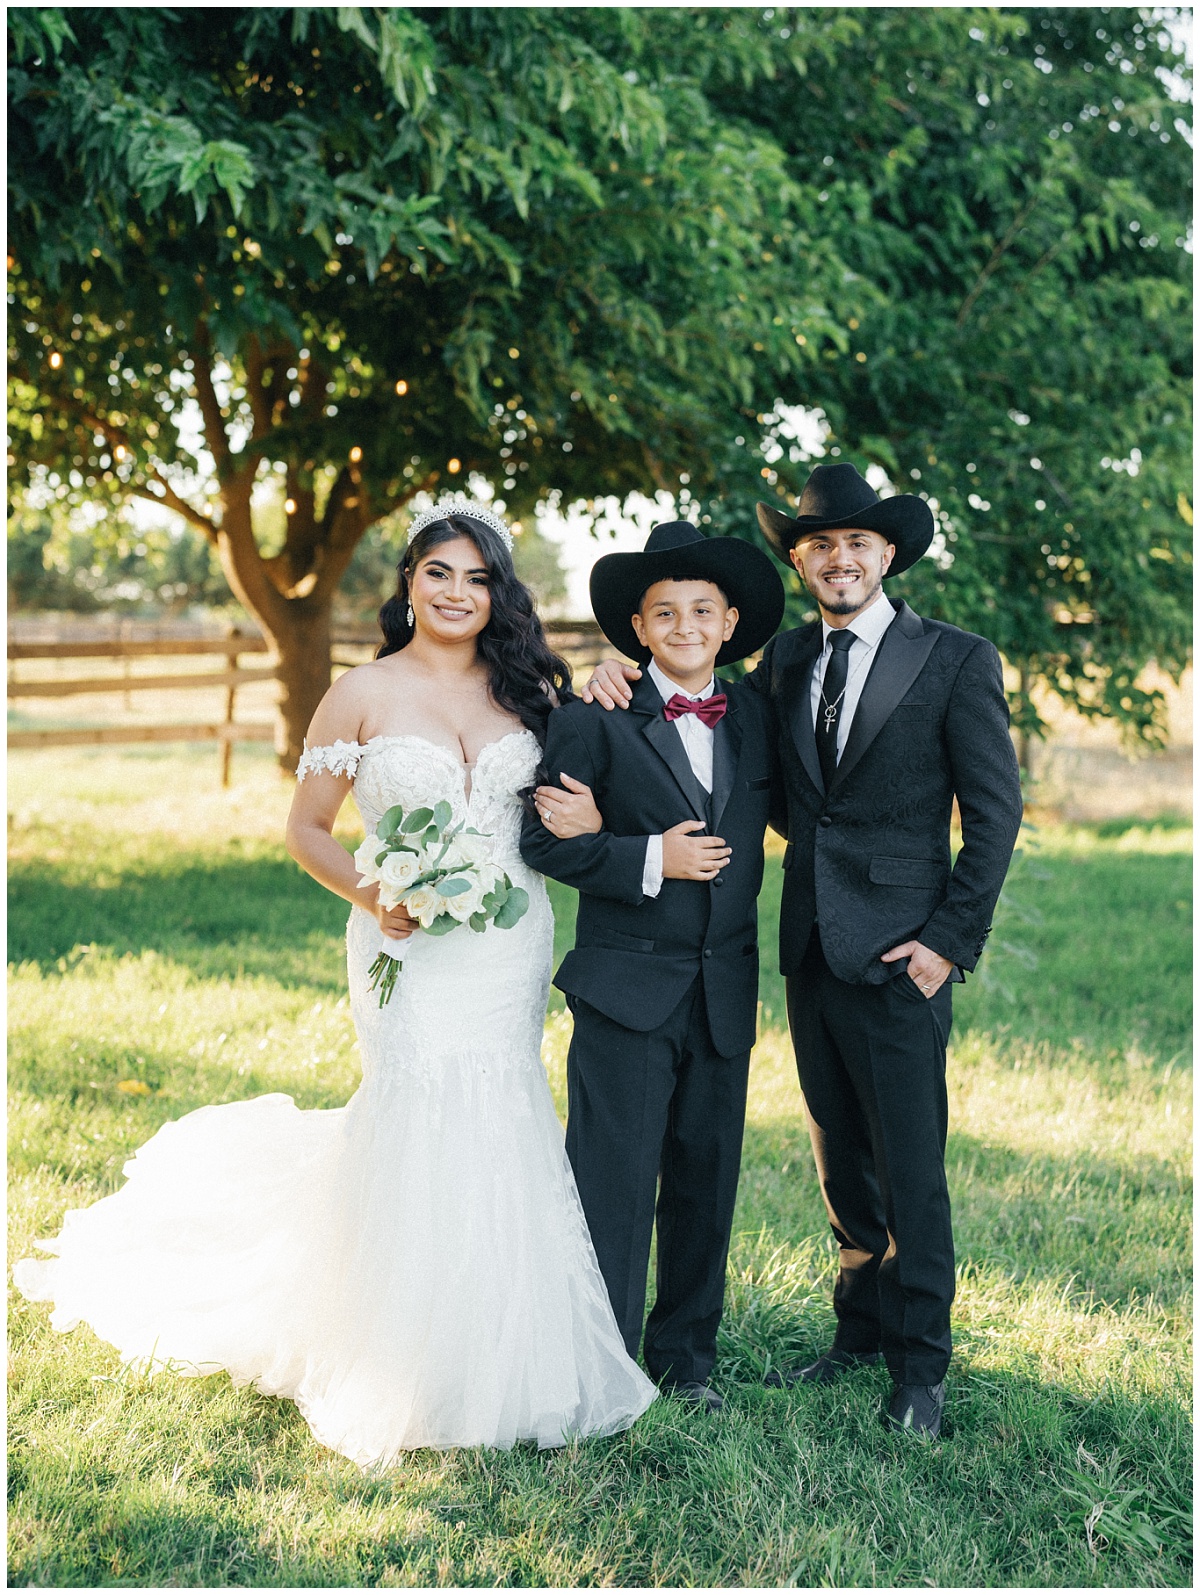 Hispanic Wedding Couple for their Wedding Photos.